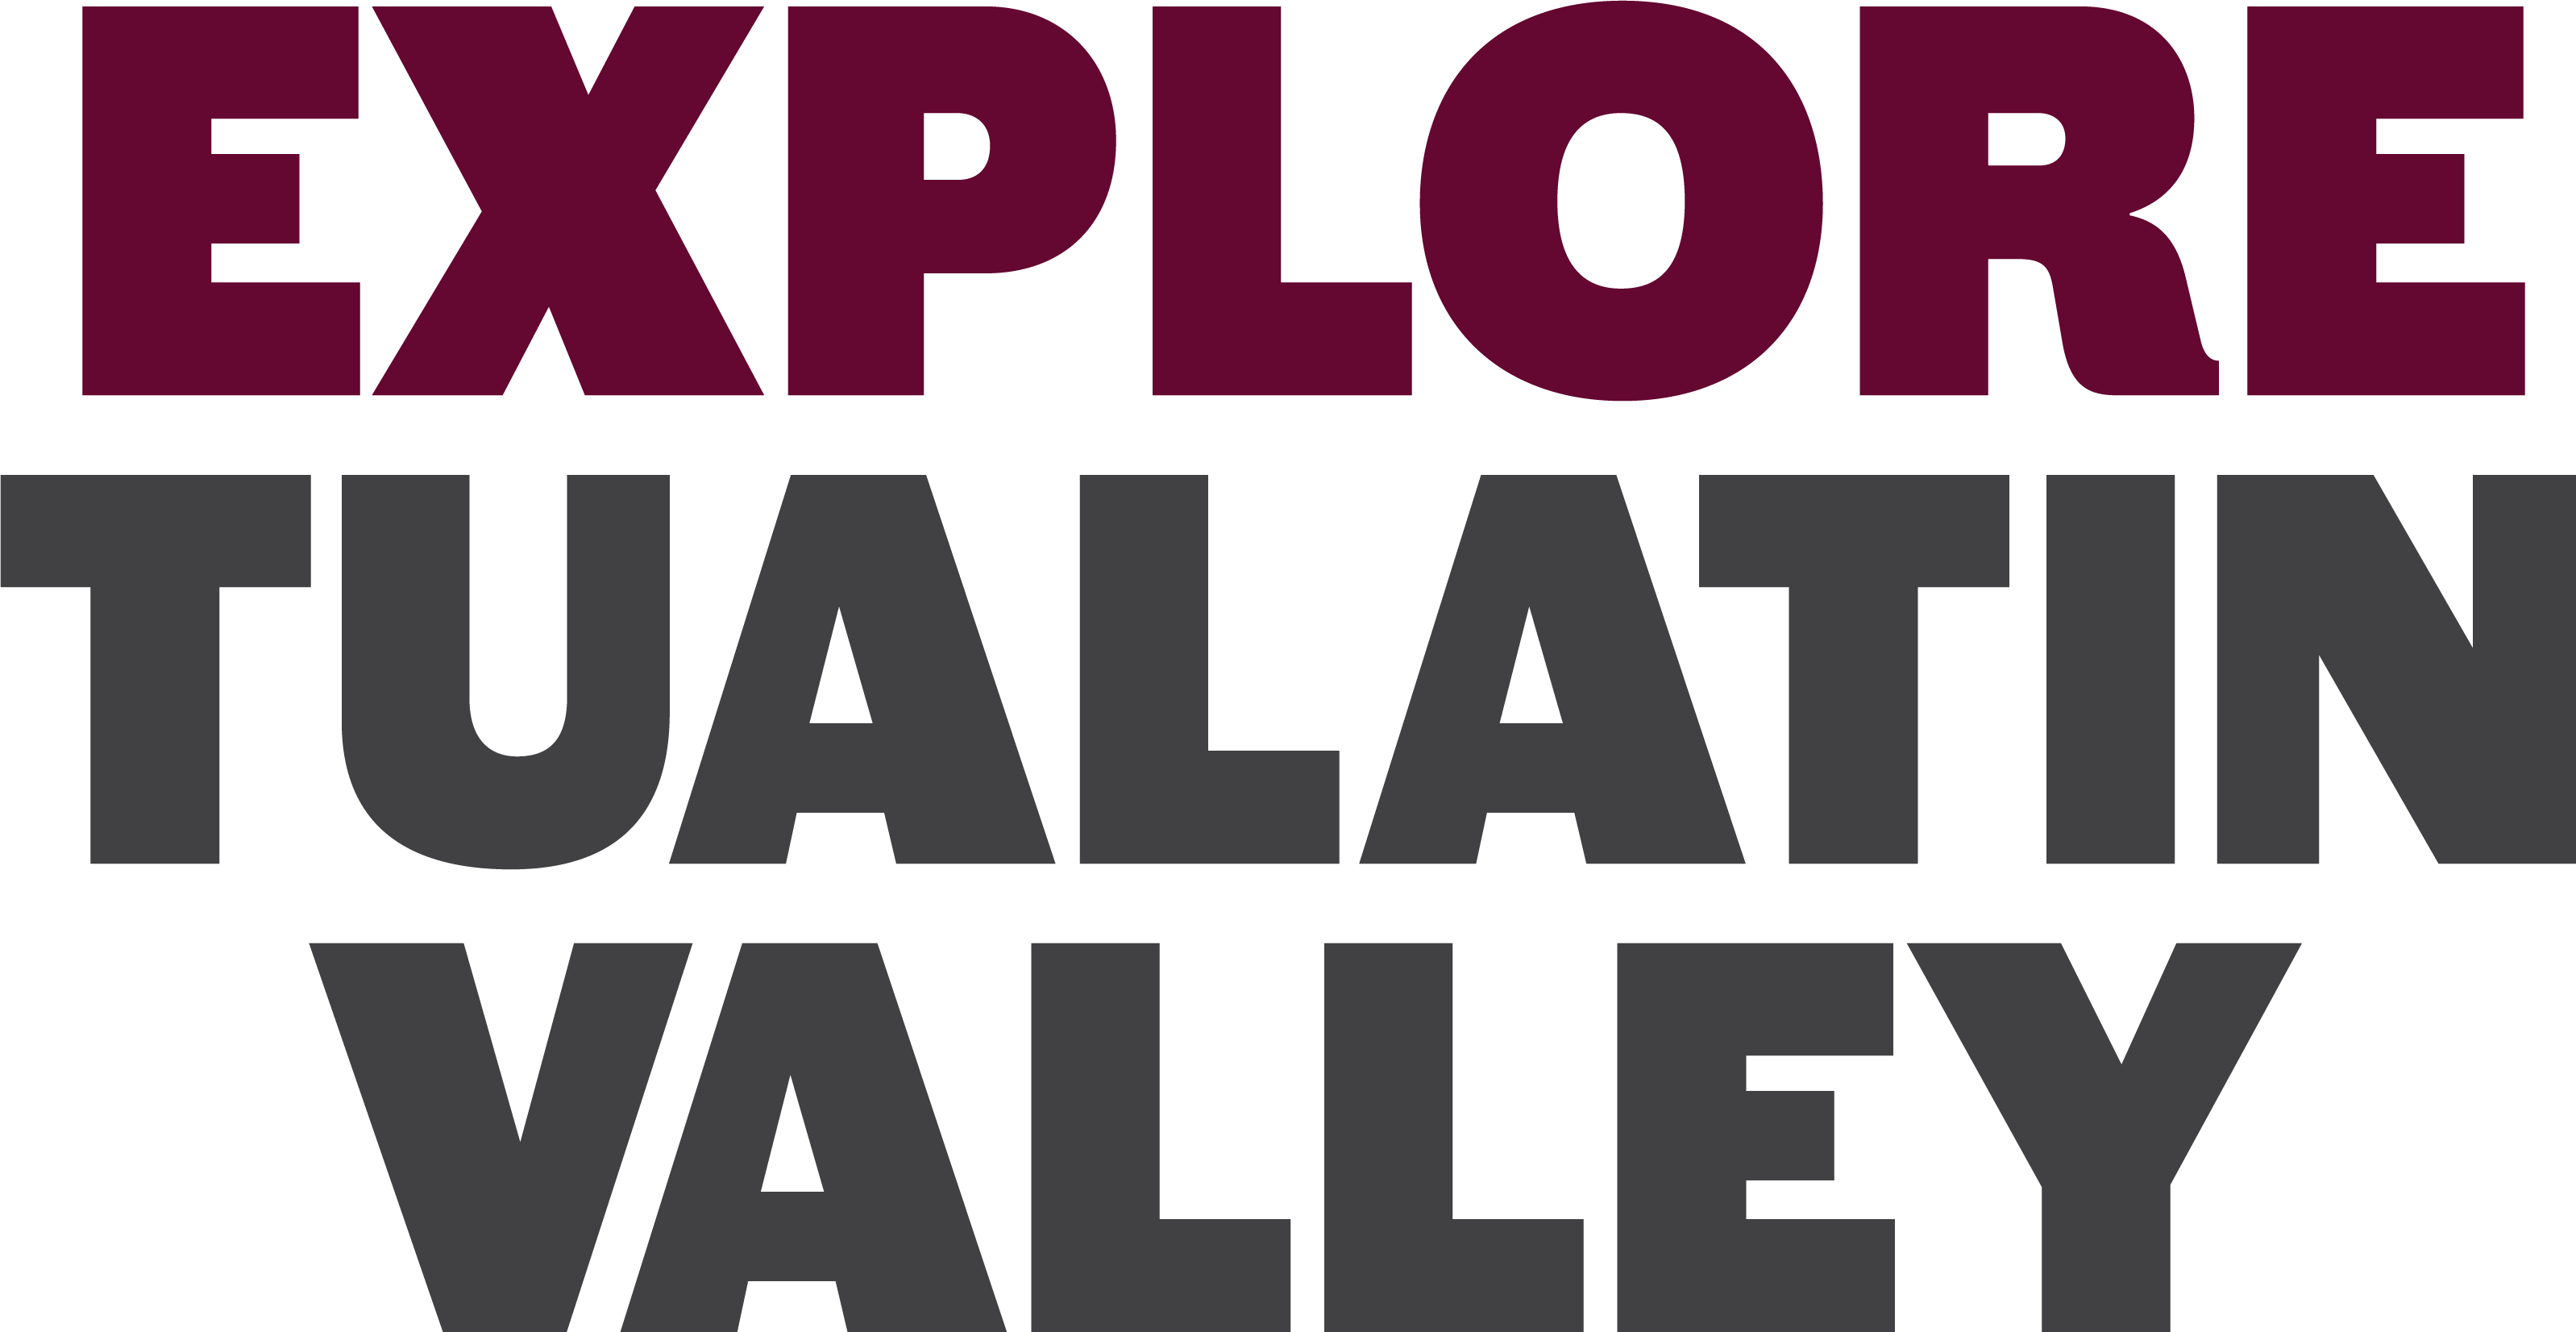 Explore Tualatin Valley